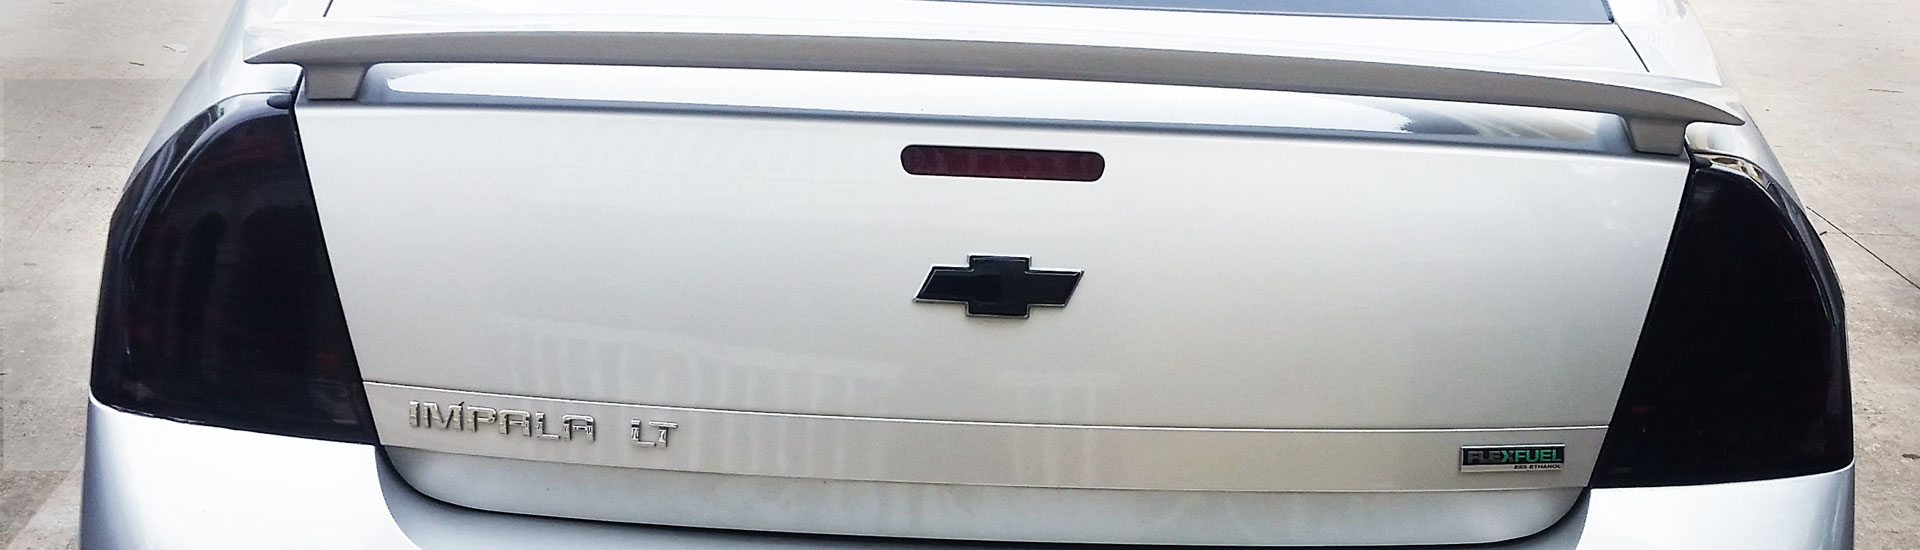 Chevrolet Impala Tail Light Tint Covers